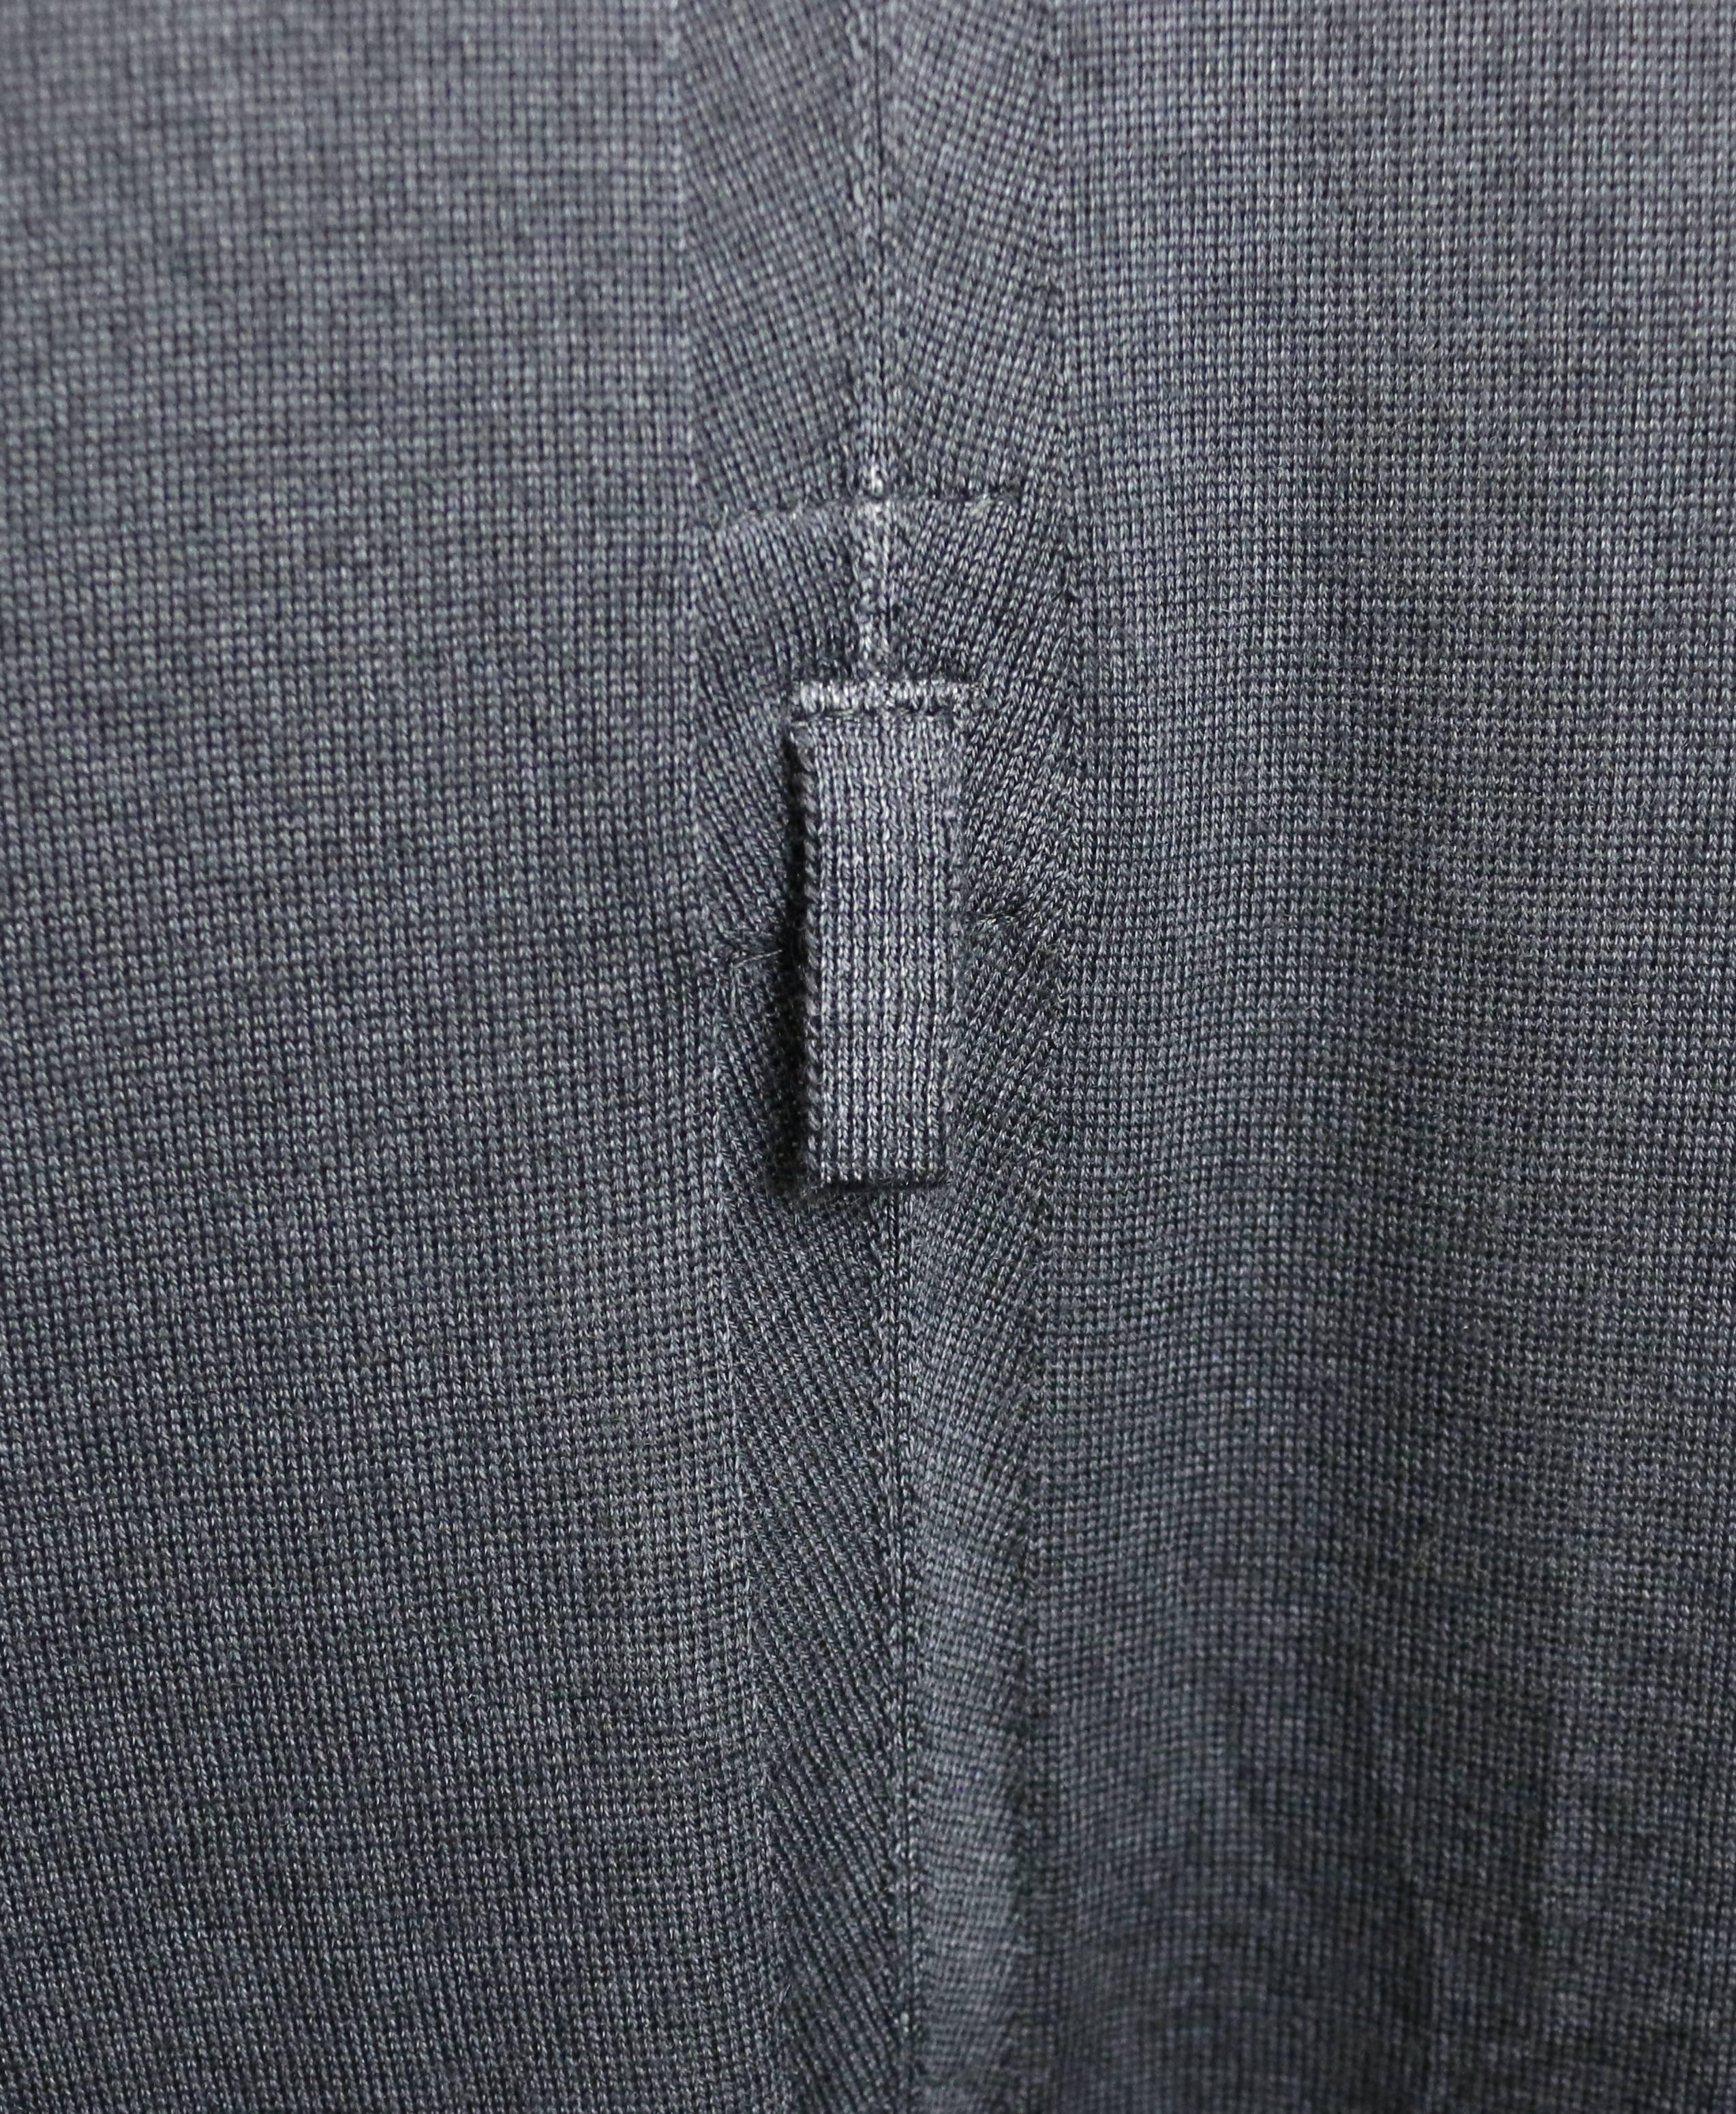 Yves Saint Laurent by Stefano Pilati Grey Wool Long Maxi Dress For Sale 1